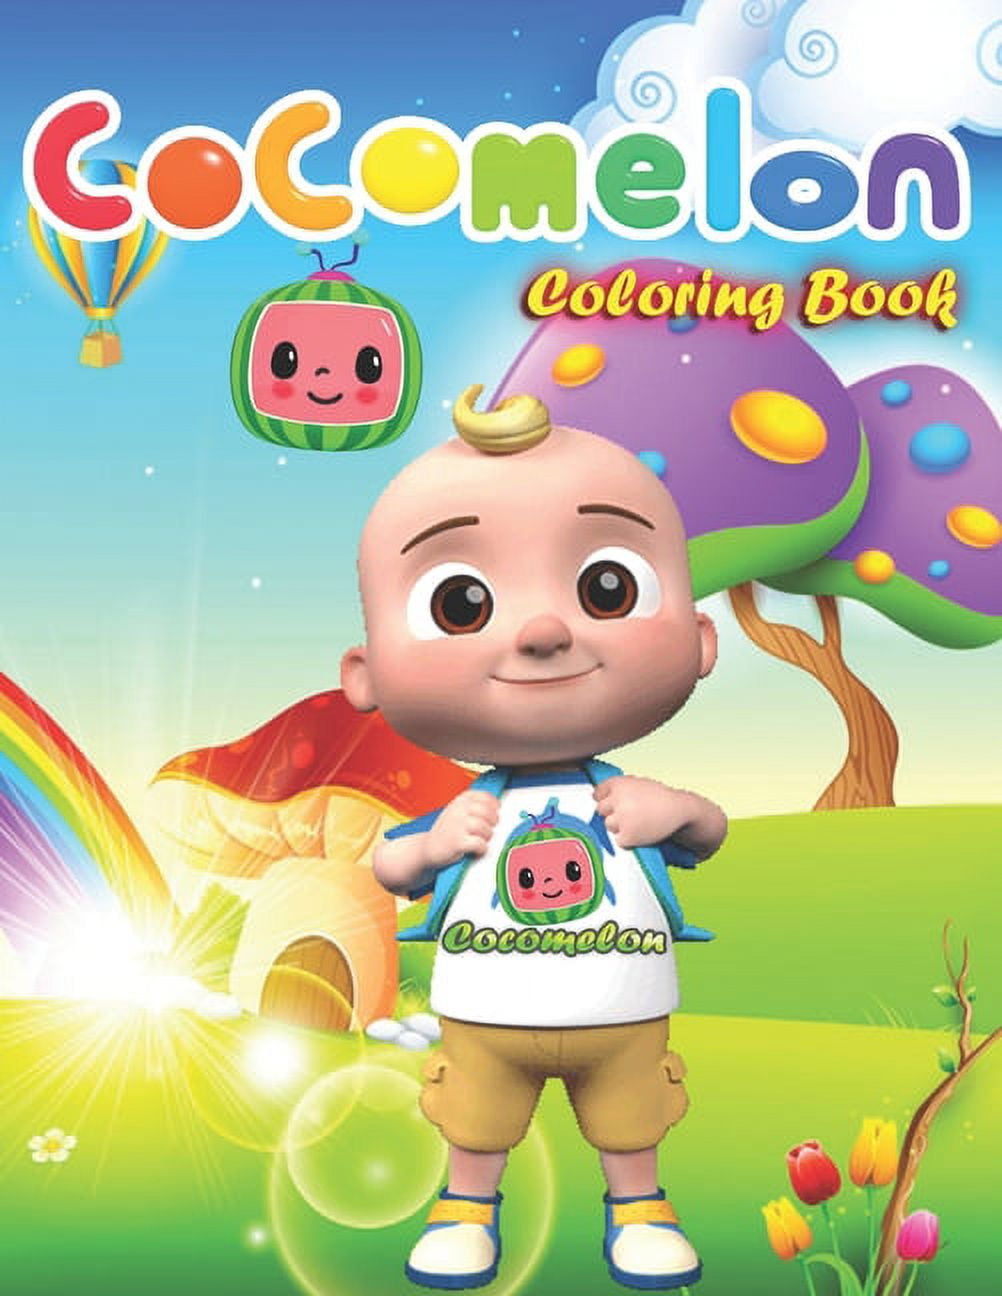 Cocomelon Coloring Book - Play UNBLOCKED Cocomelon Coloring Book